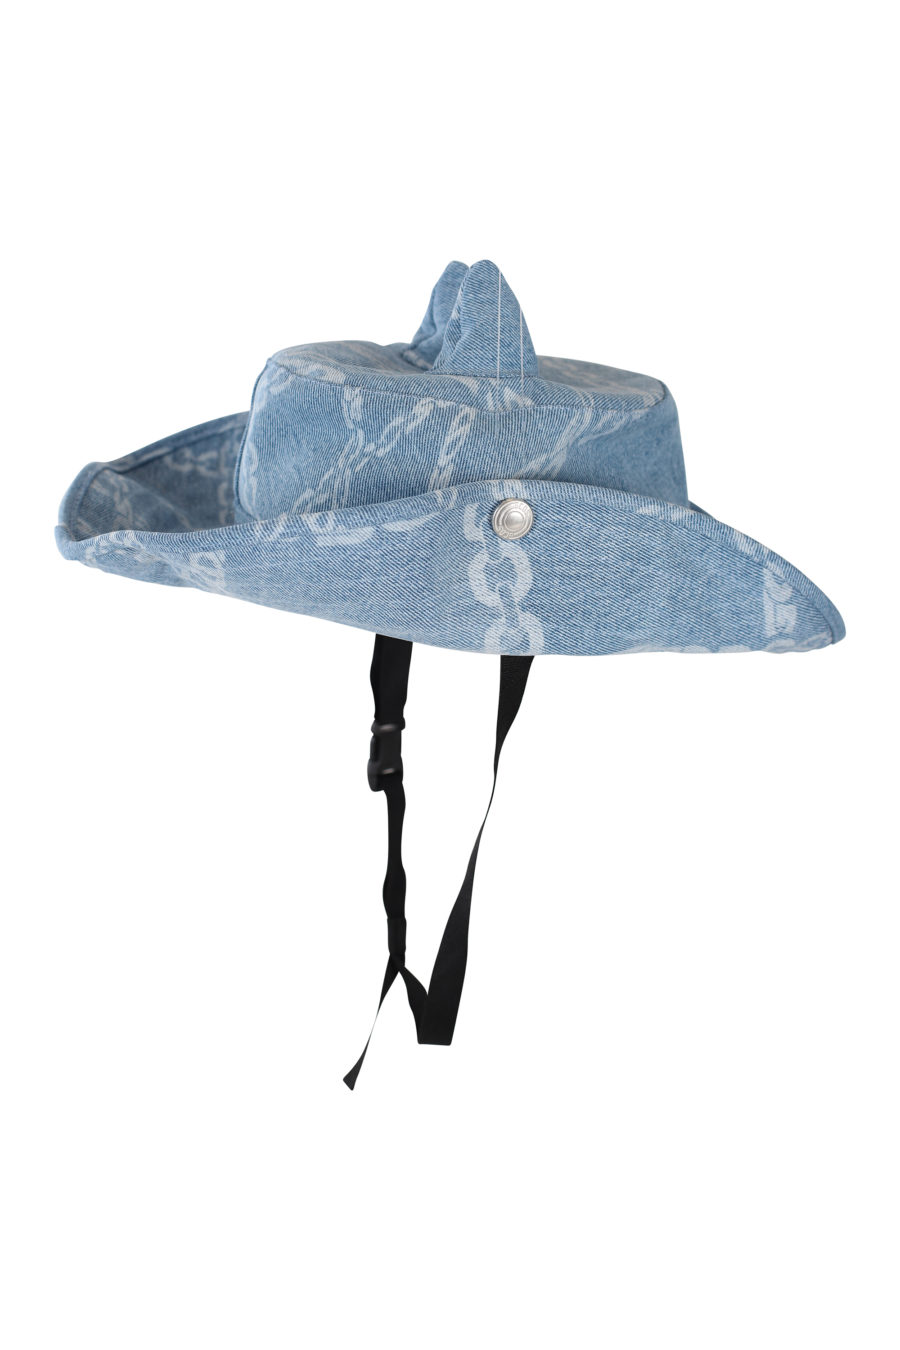 Sombrero azul denim - IMG 1515